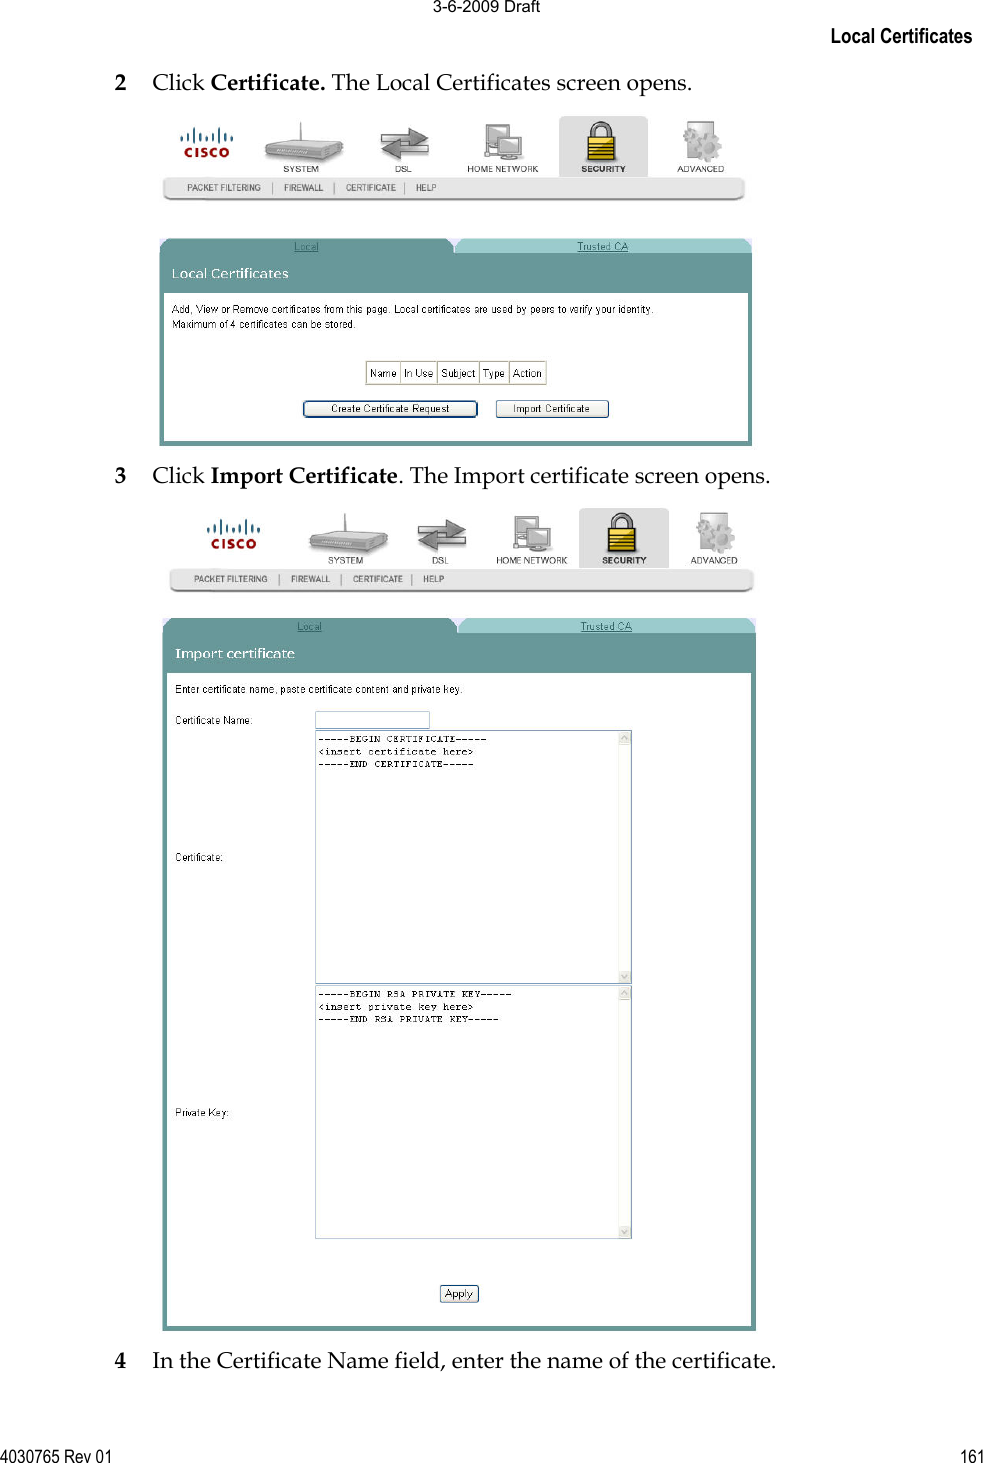 Local Certificates 4030765 Rev 01 1612Click Certificate. The Local Certificates screen opens. 3Click Import Certificate. The Import certificate screen opens.4In the Certificate Name field, enter the name of the certificate. 3-6-2009 Draft